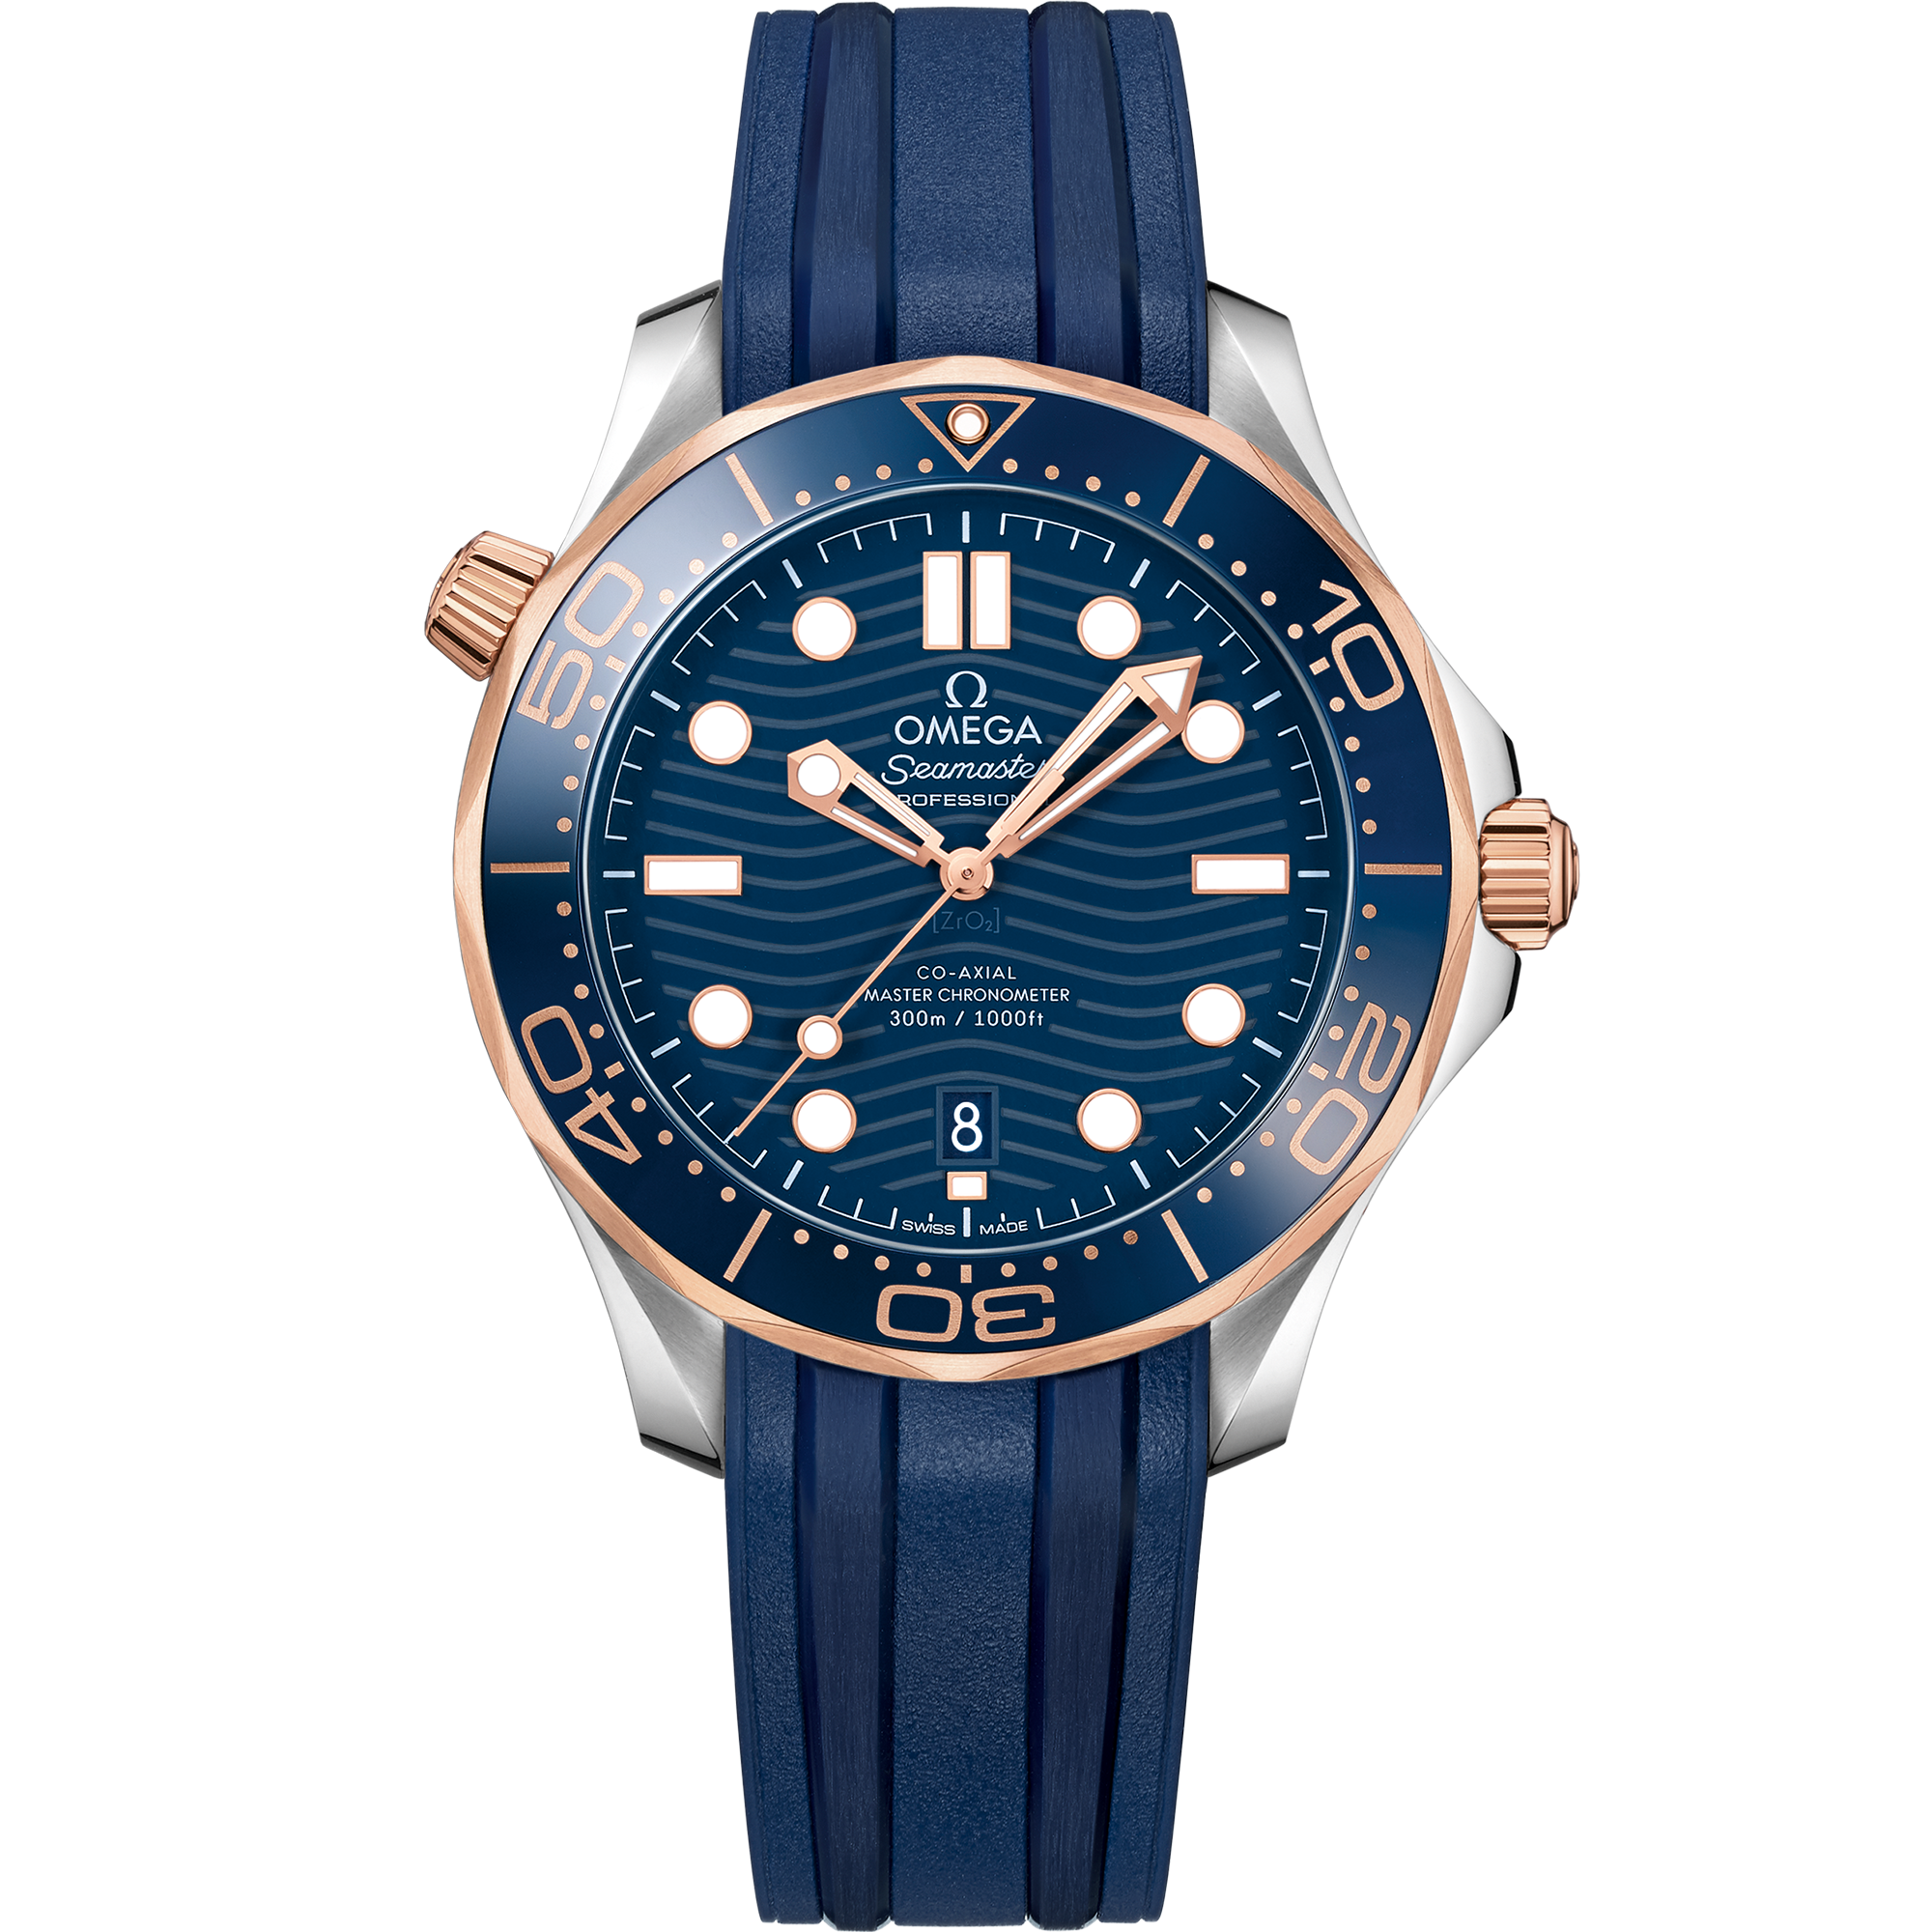 Diver 300M Seamaster Steel Chronometer Watch 210.32.42.20.06.001 | OMEGA US®